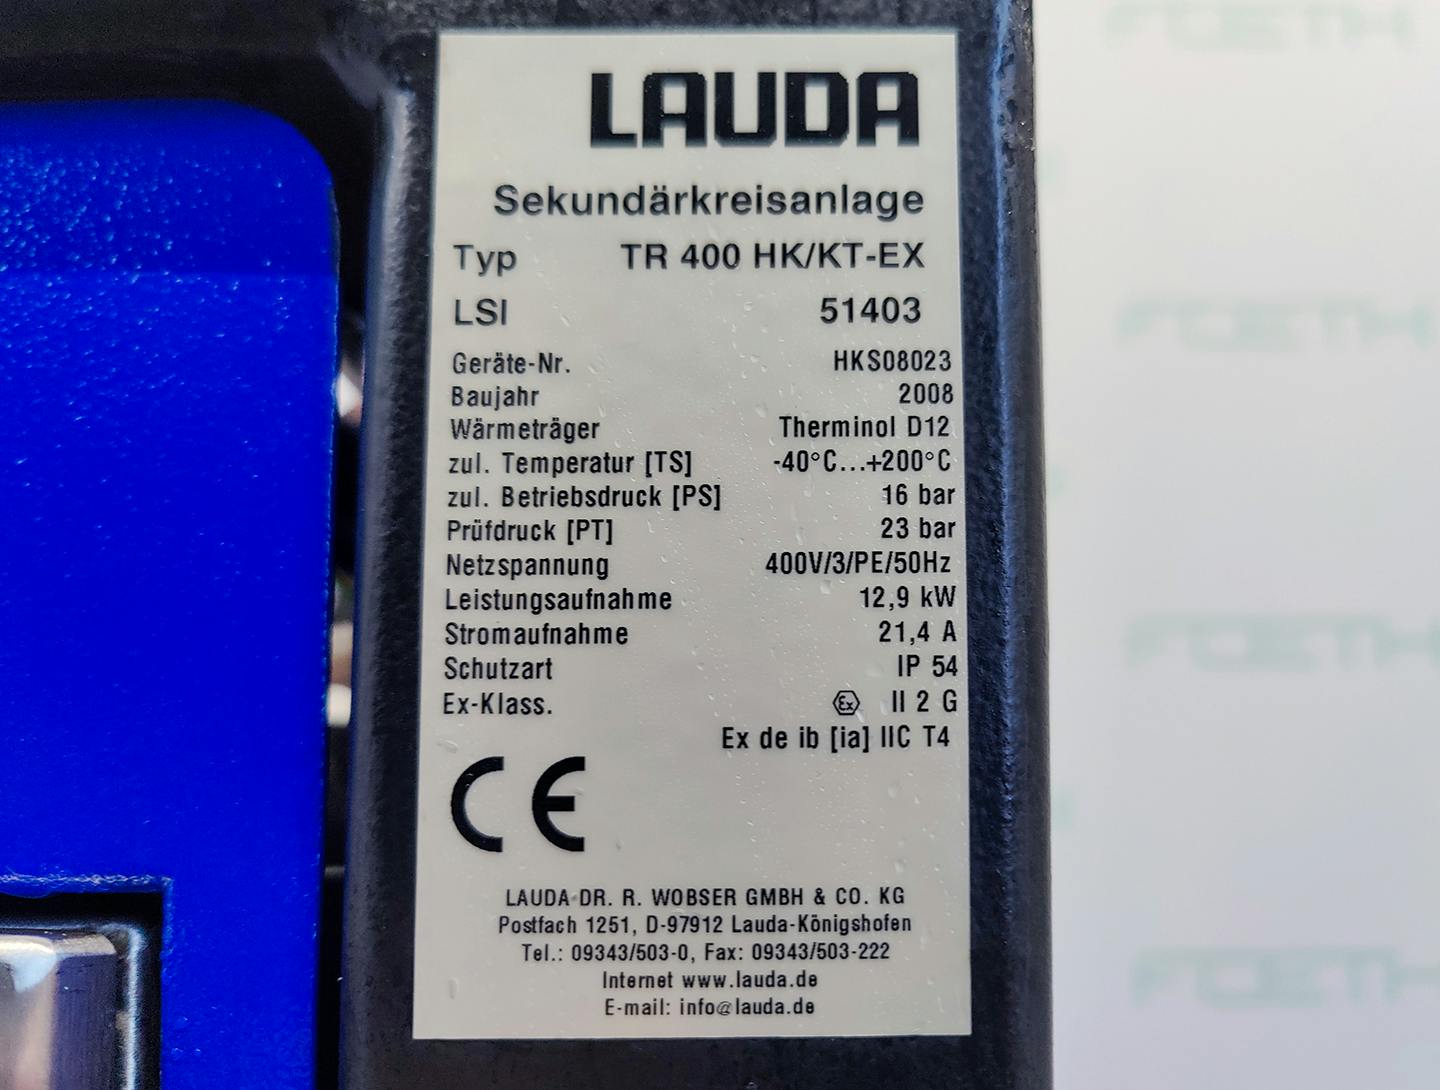 Lauda TR400 HK/KT-EX "secondary circuit system" - Thermorégulateur - image 6